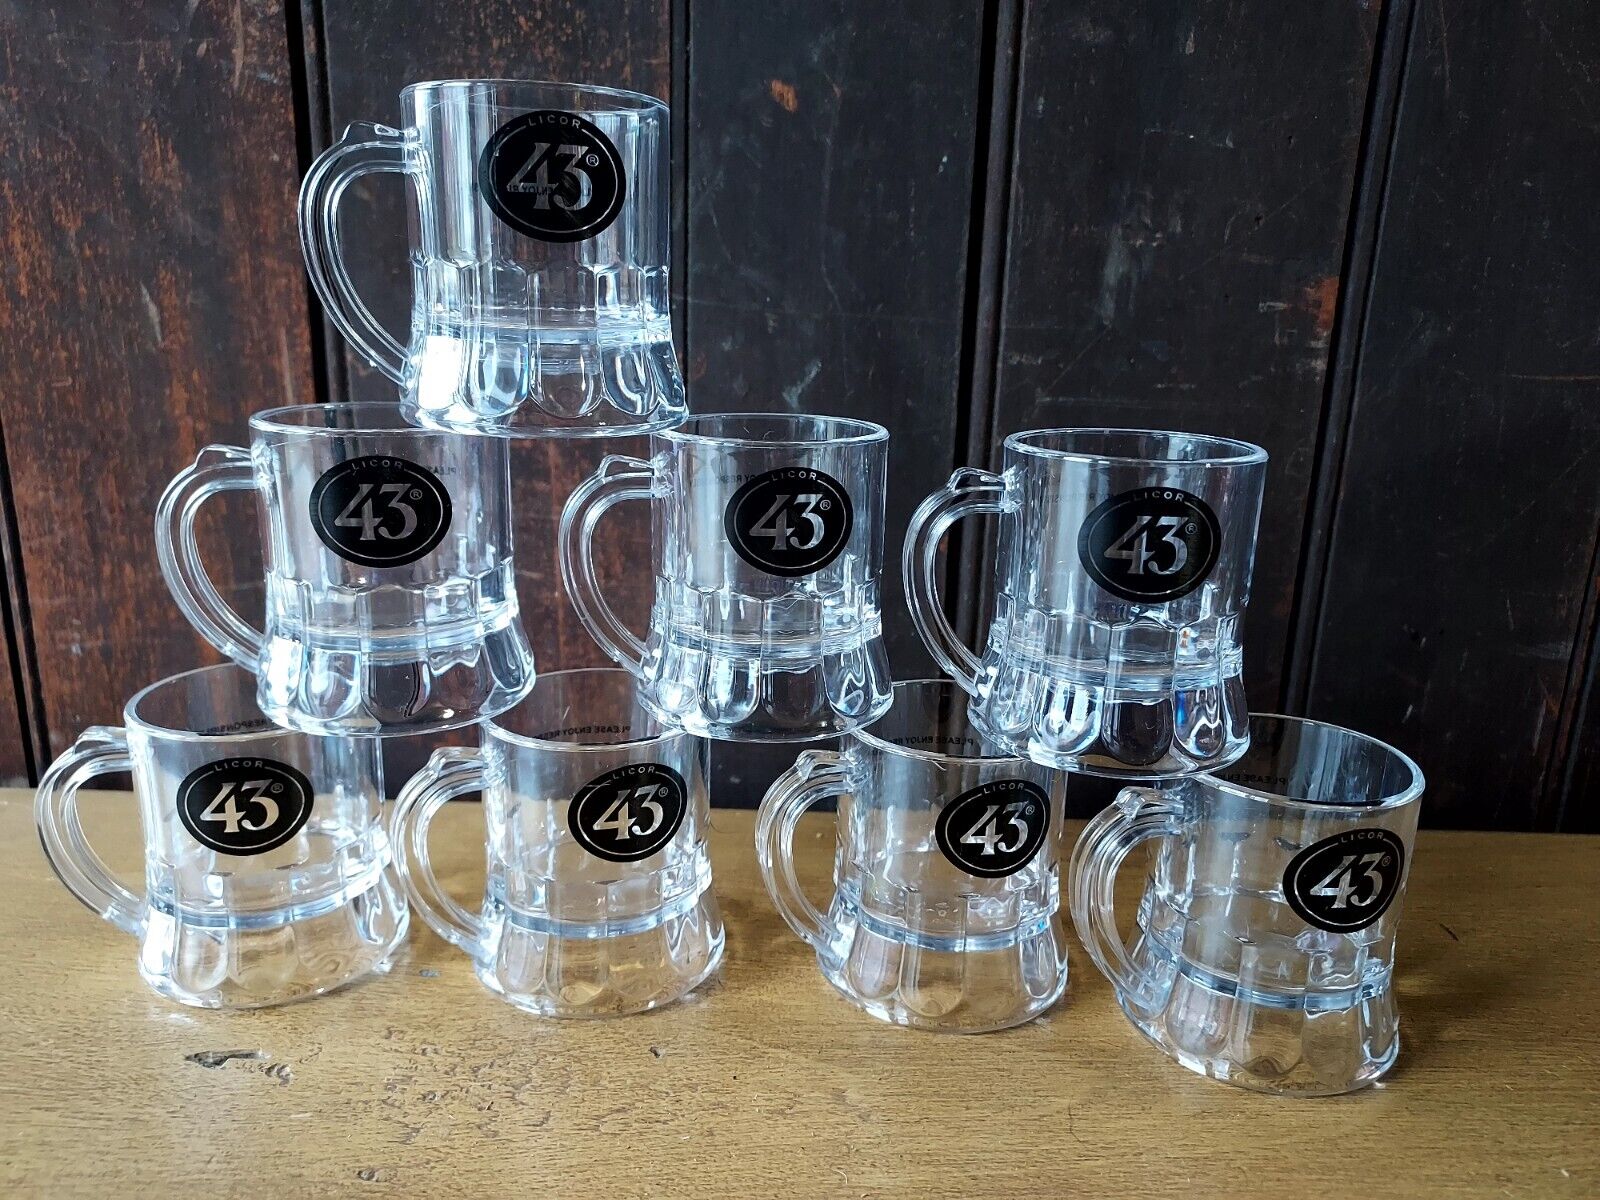  Licor 43 Little Beer PLASTIC Mug Shot glasses Set of 8